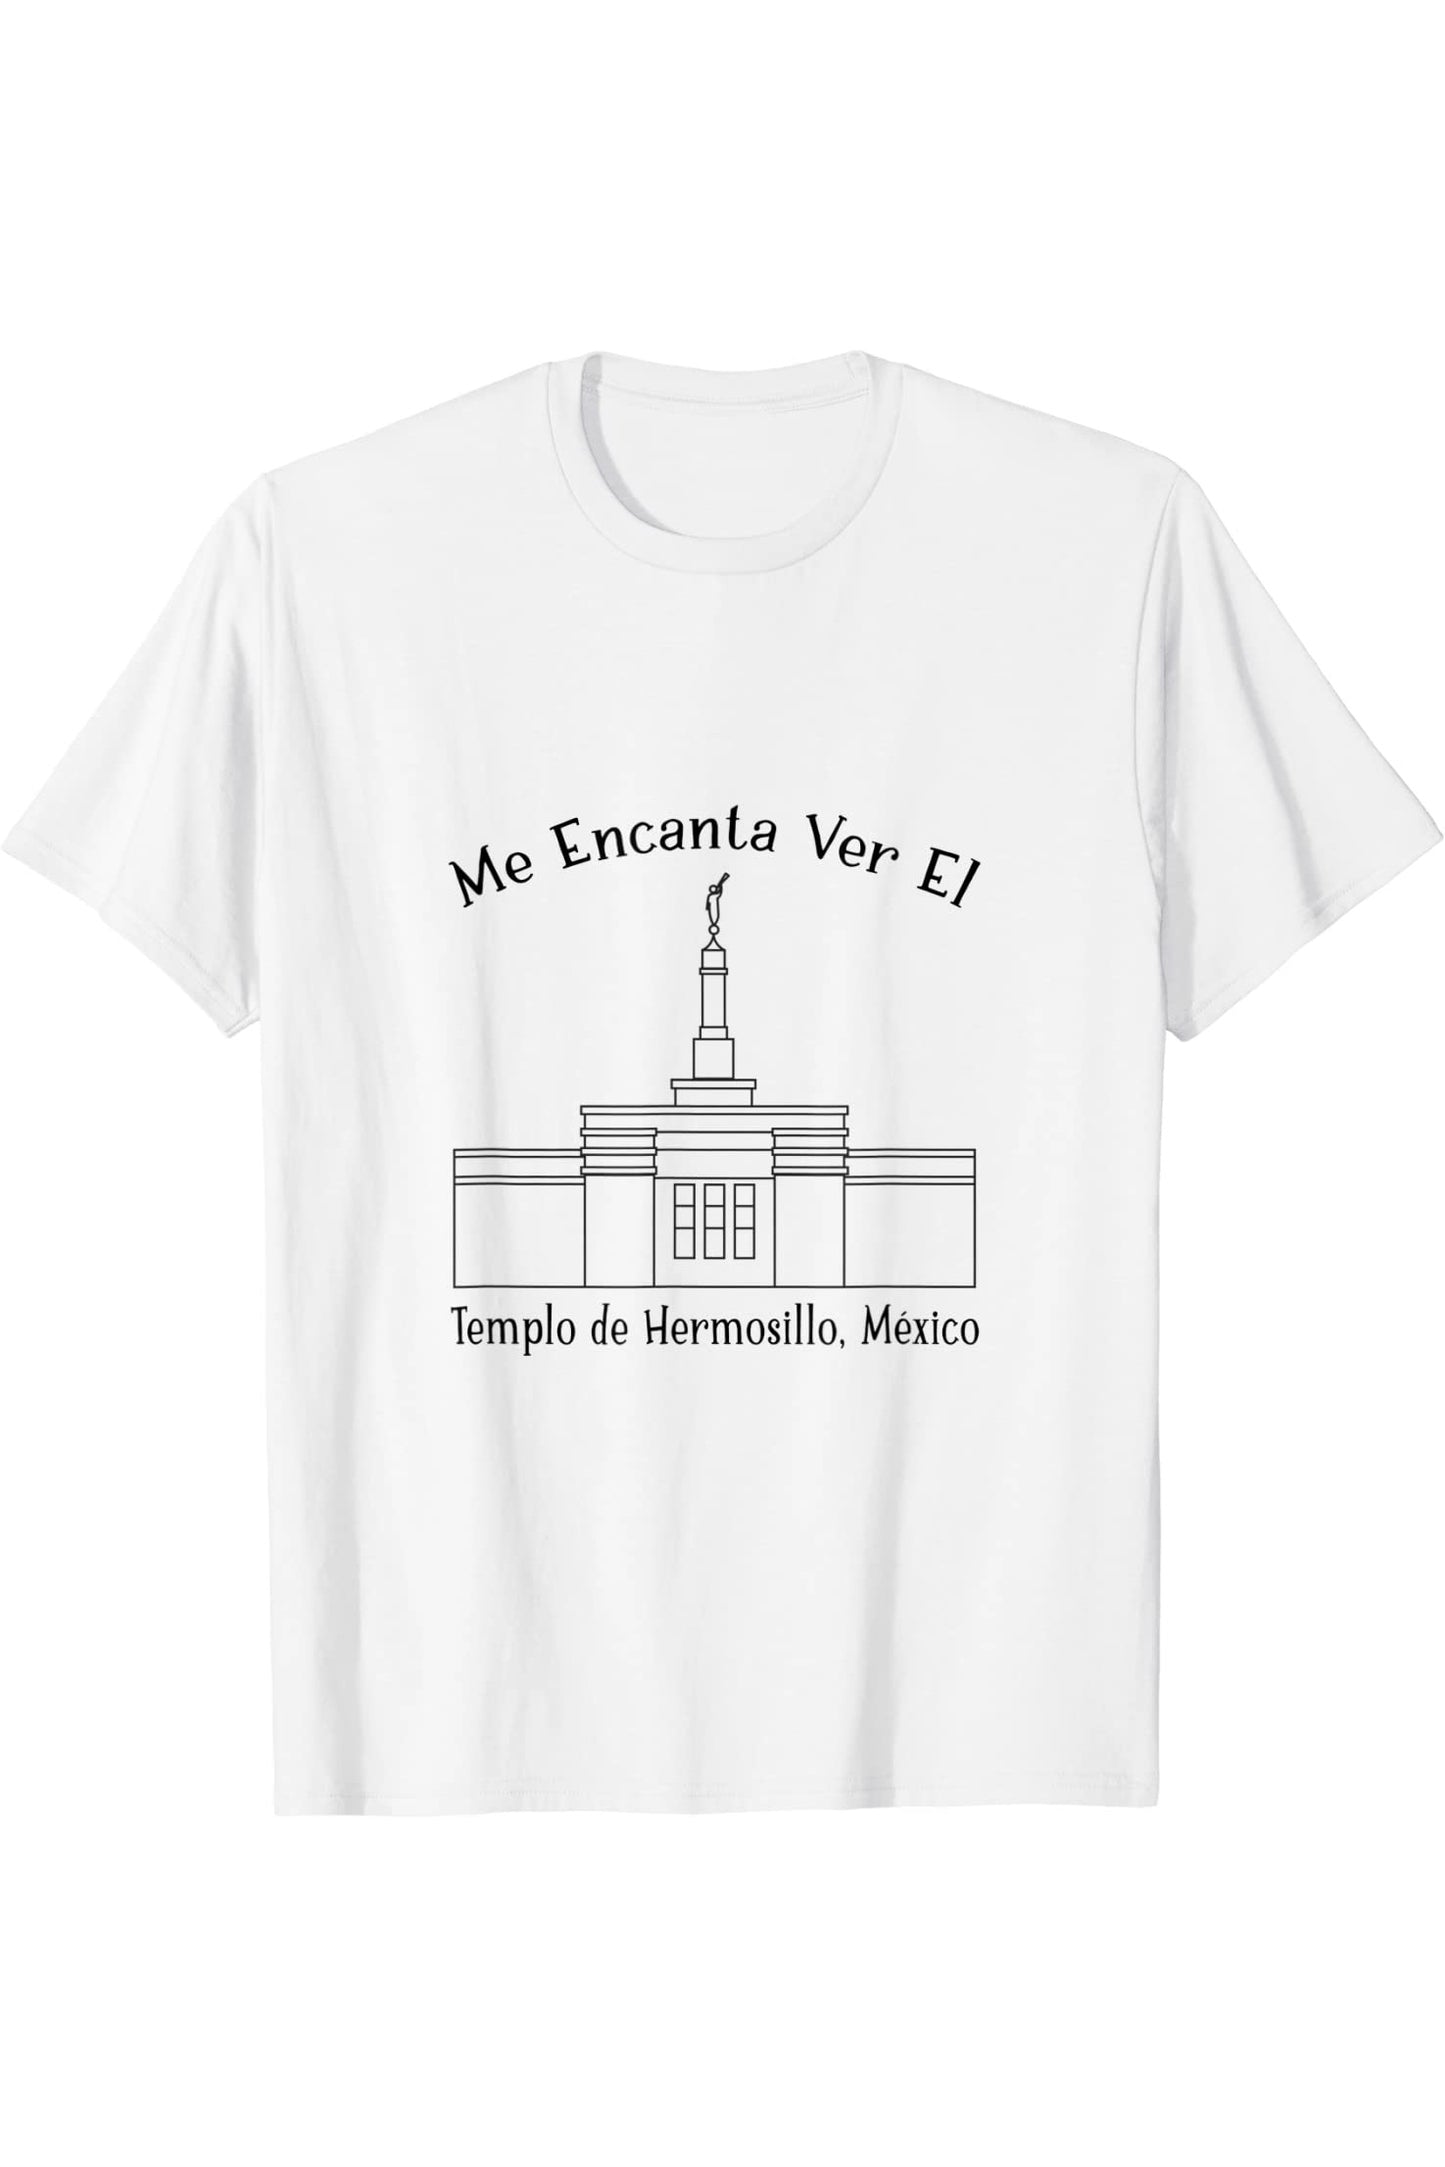 Hermosillo Mexico Temple T-Shirt - Happy Style (Spanish) US